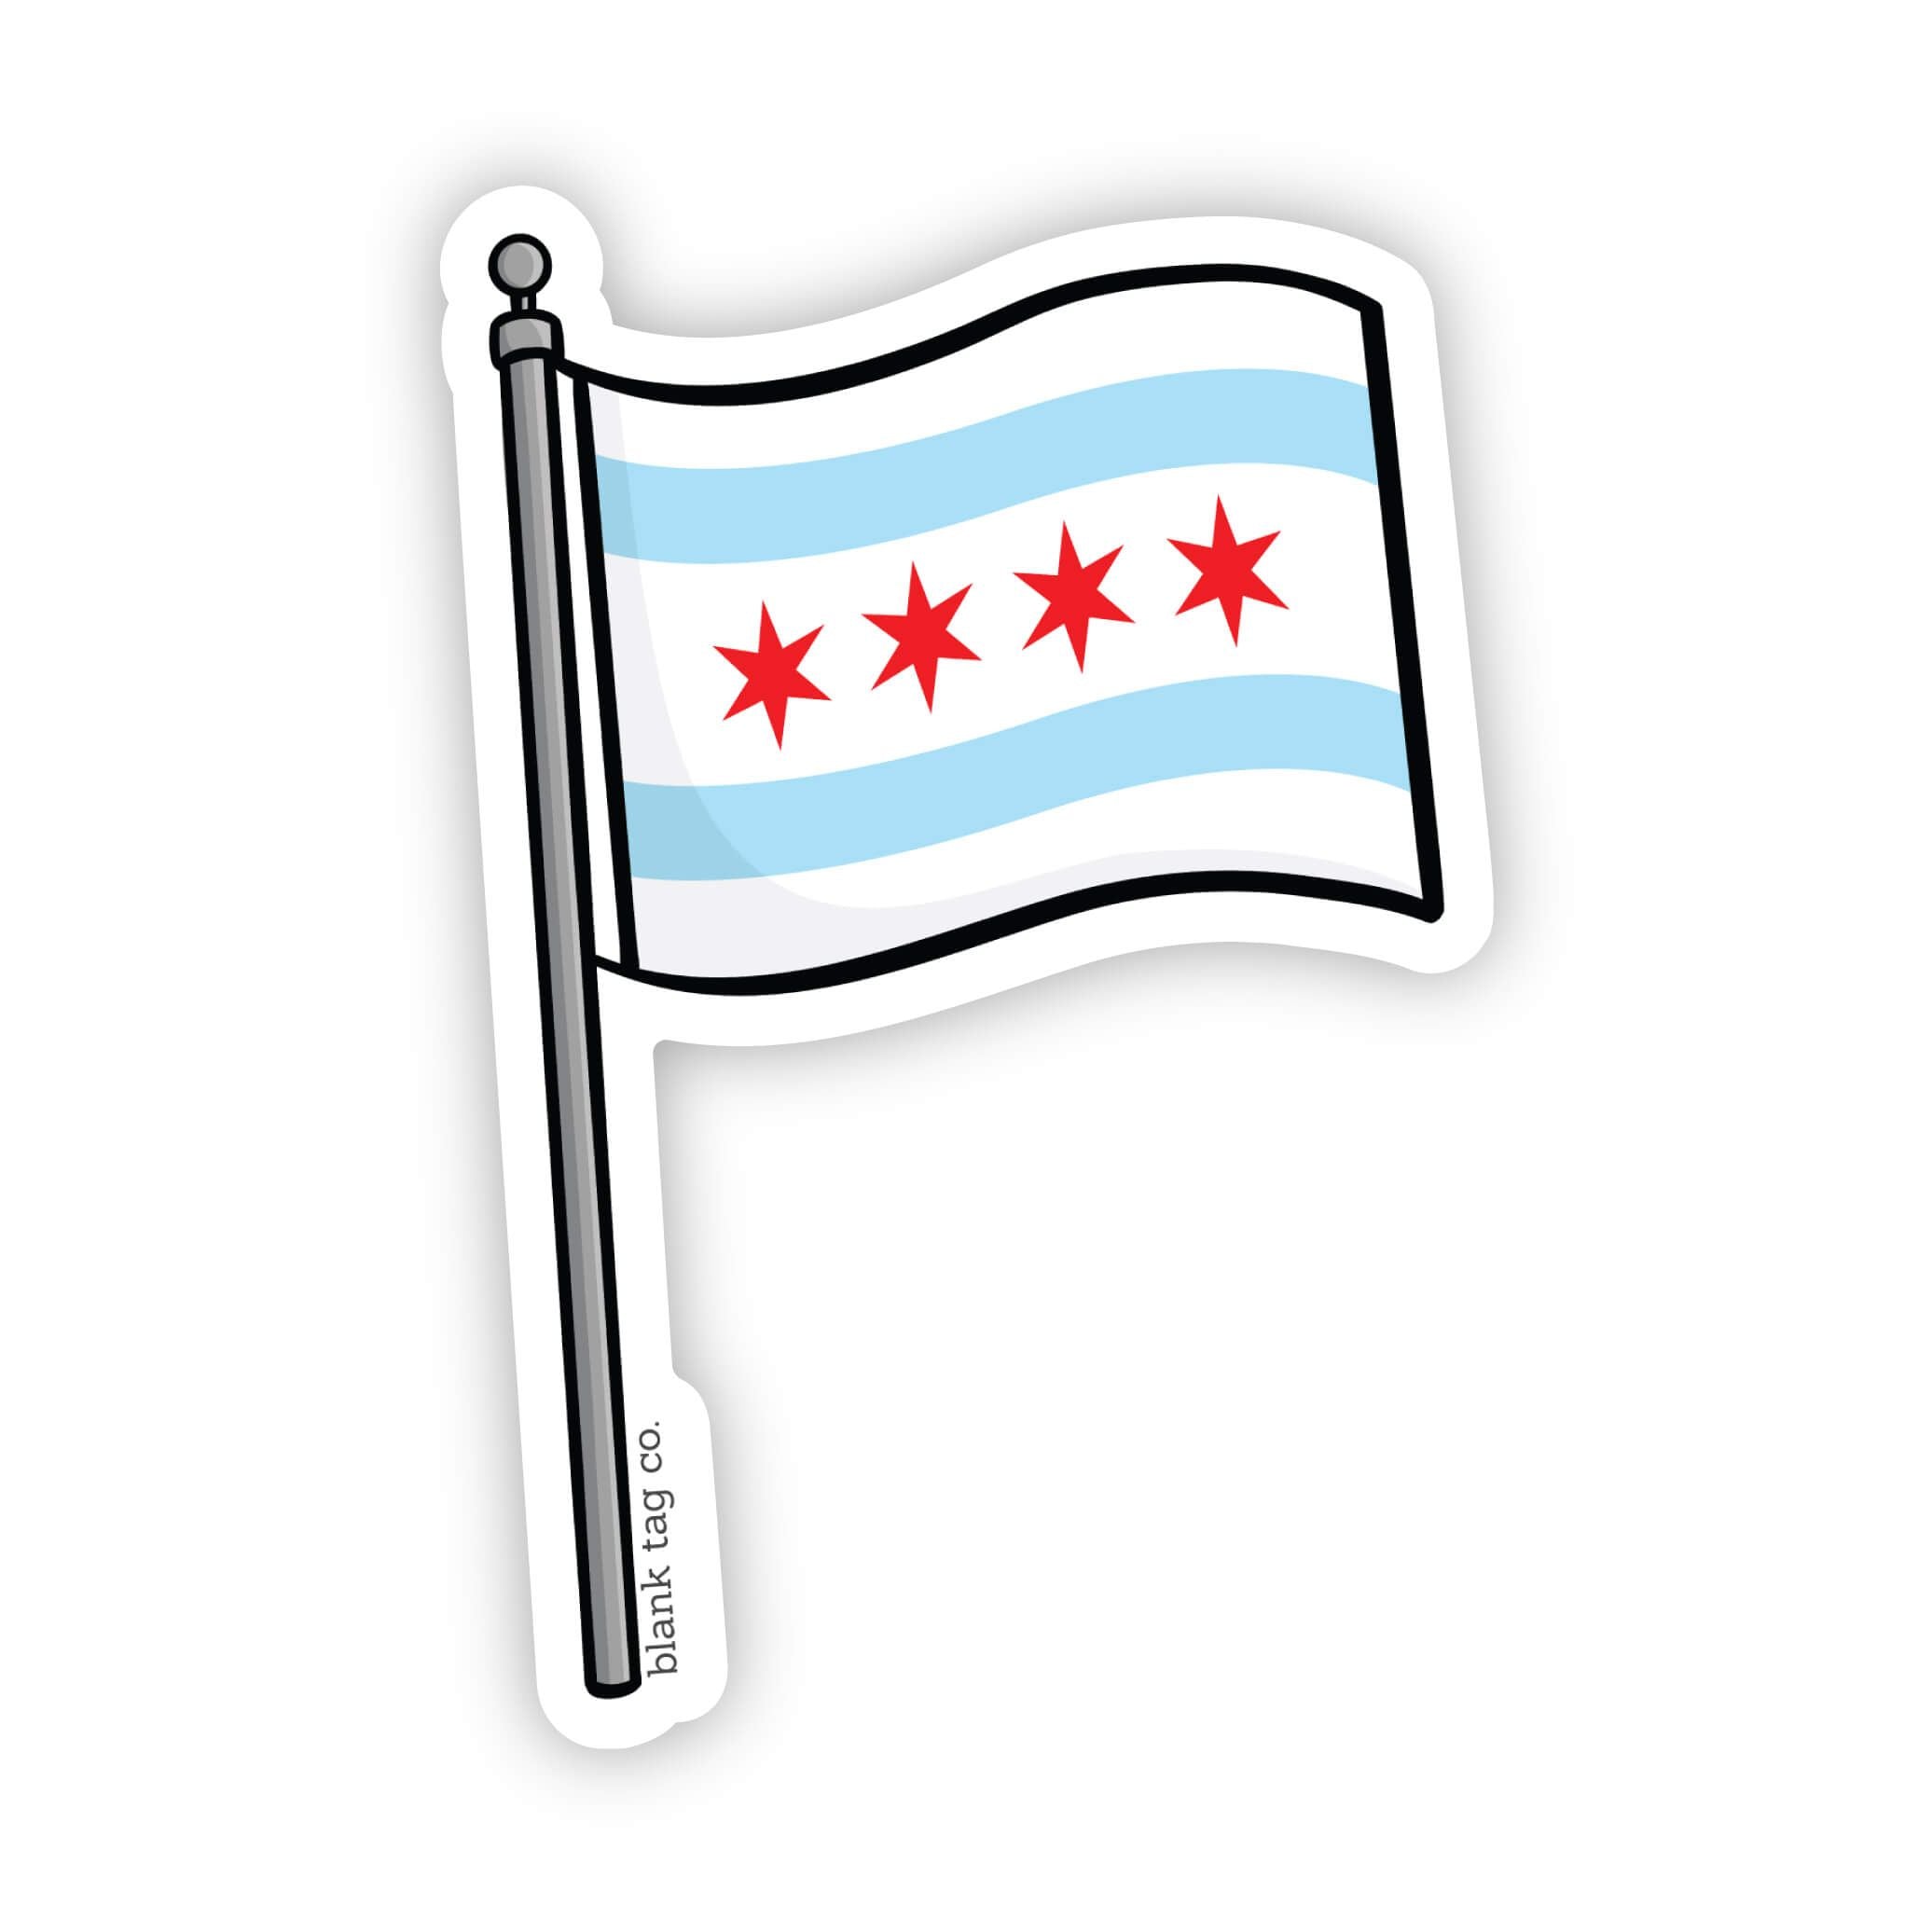 The Chicago Flag Sticker